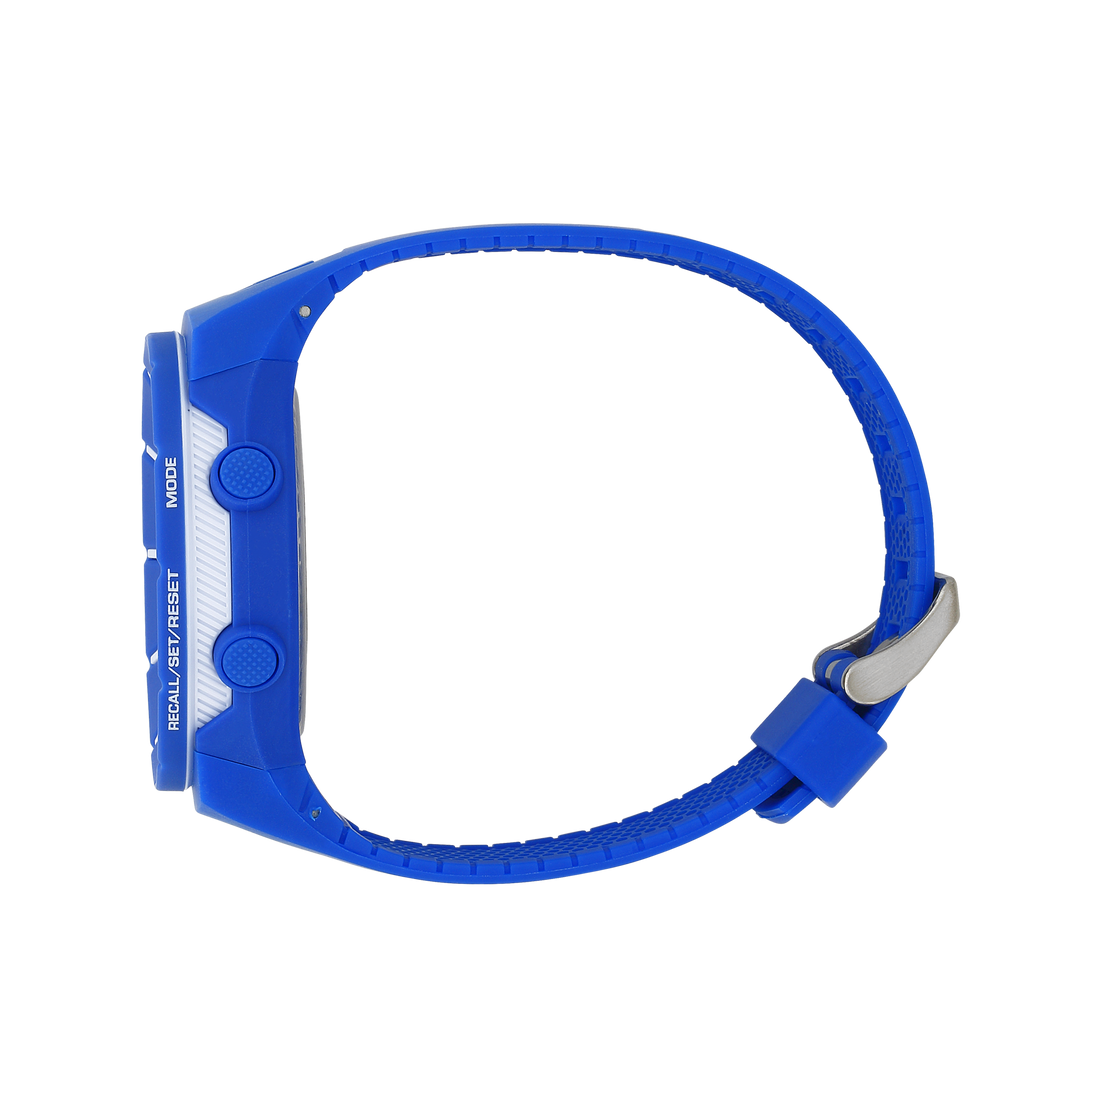 Coliseum Royal blue with White bezel Rubber digital watch